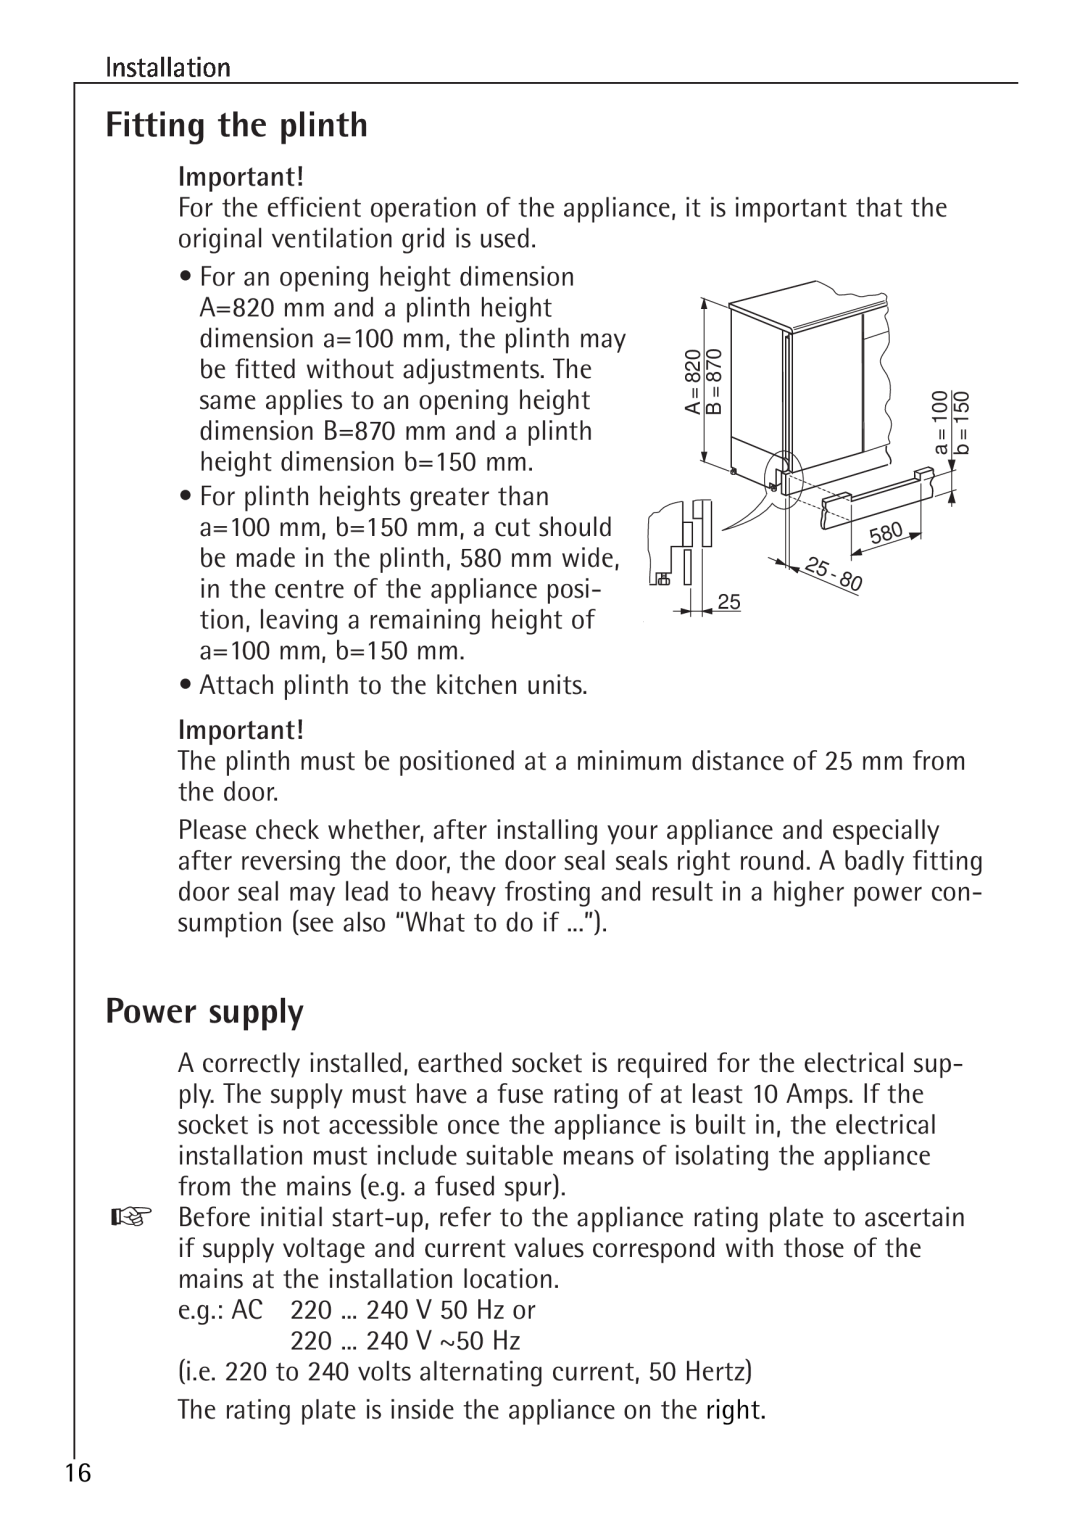 Electrolux SANTO U 86040 i installation instructions Fitting the plinth, Power supply 